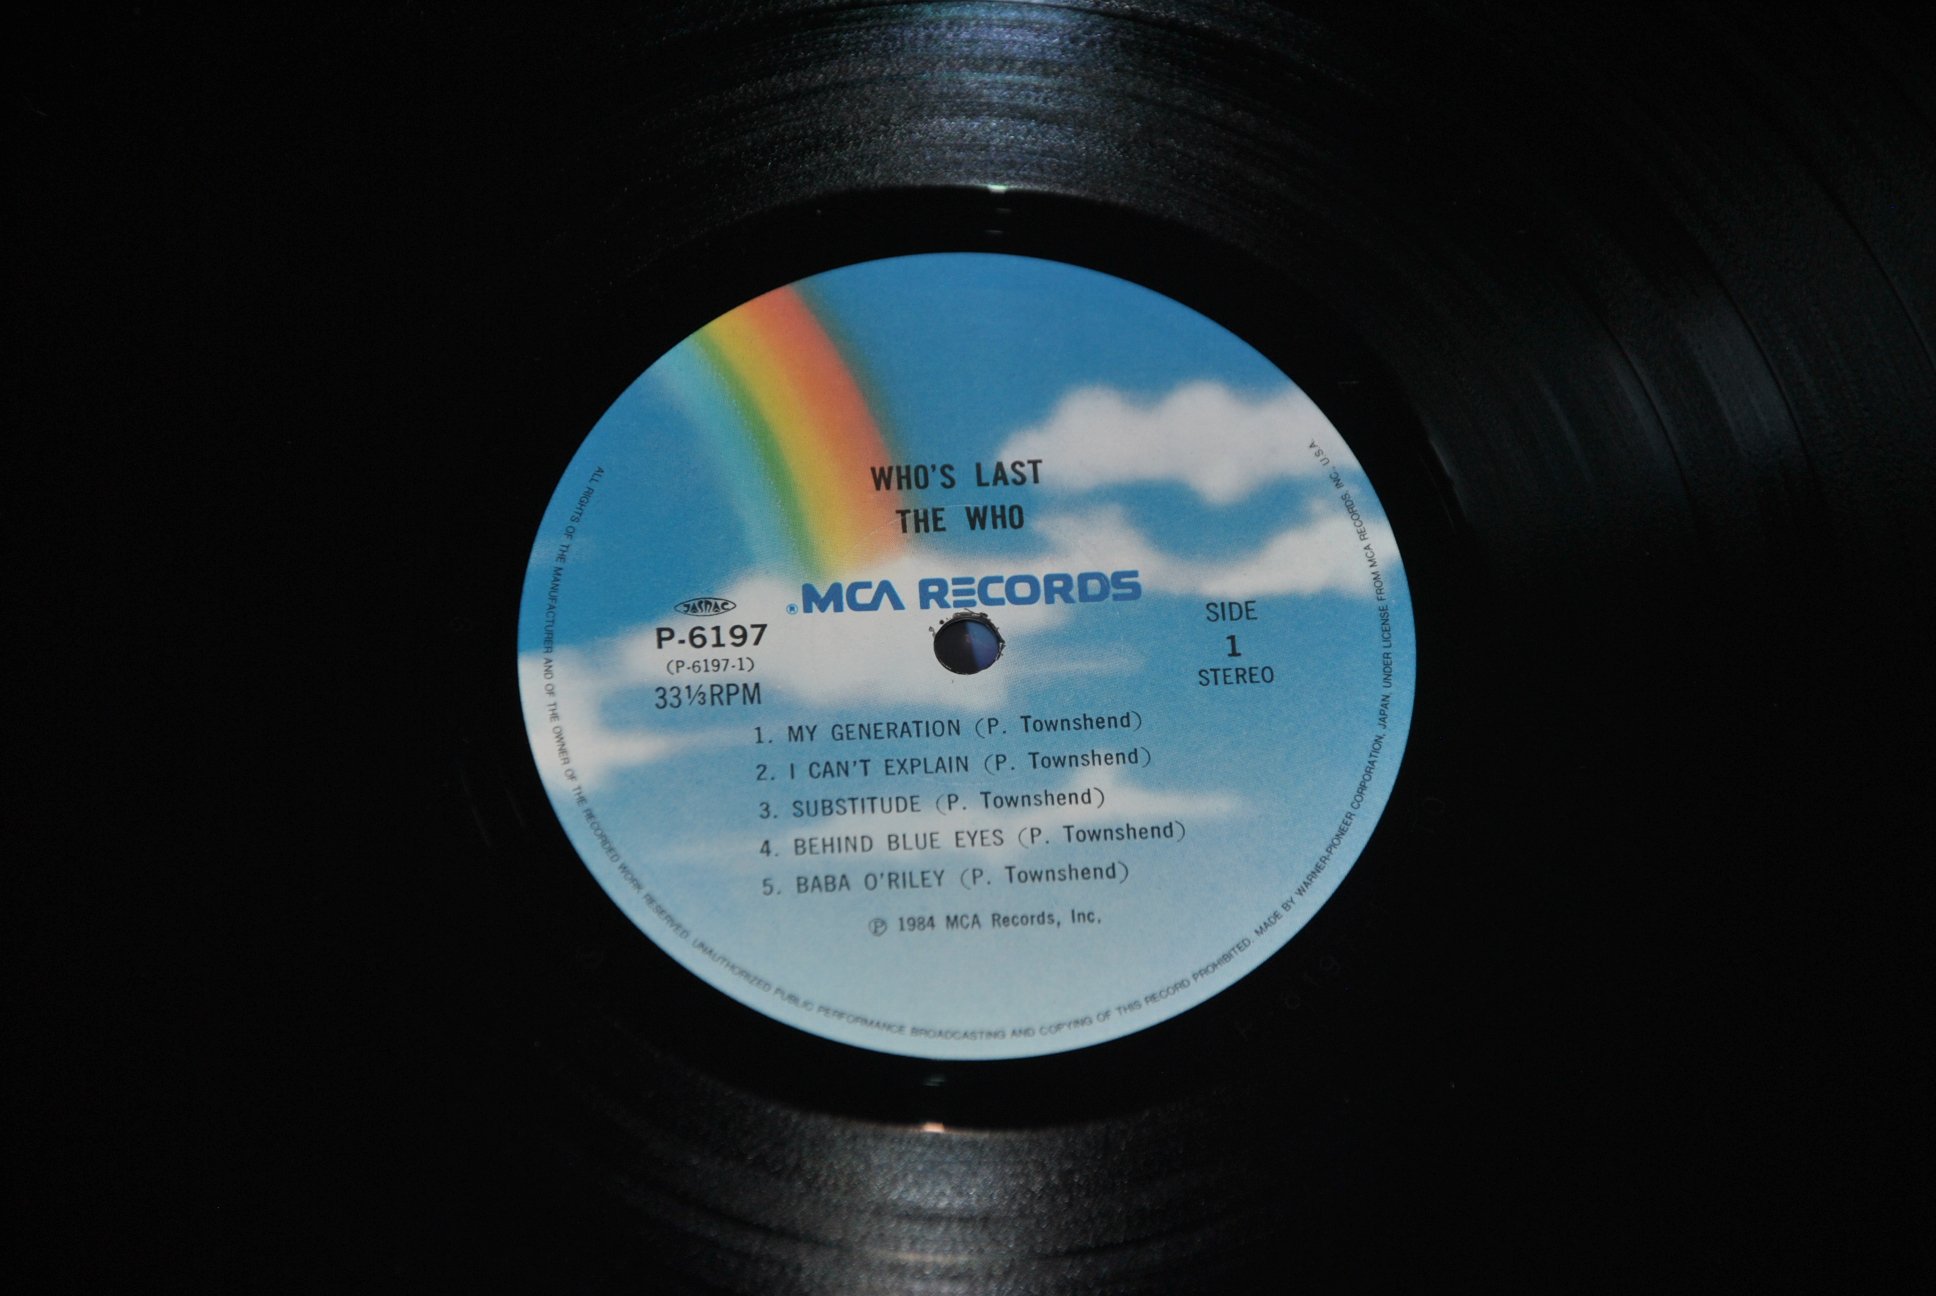 THE WHO – WHO’S LAST – MCA RECORDS P-6197-8 1984 – 2LP JAPAN OBI NM

DOPPIO LP C…